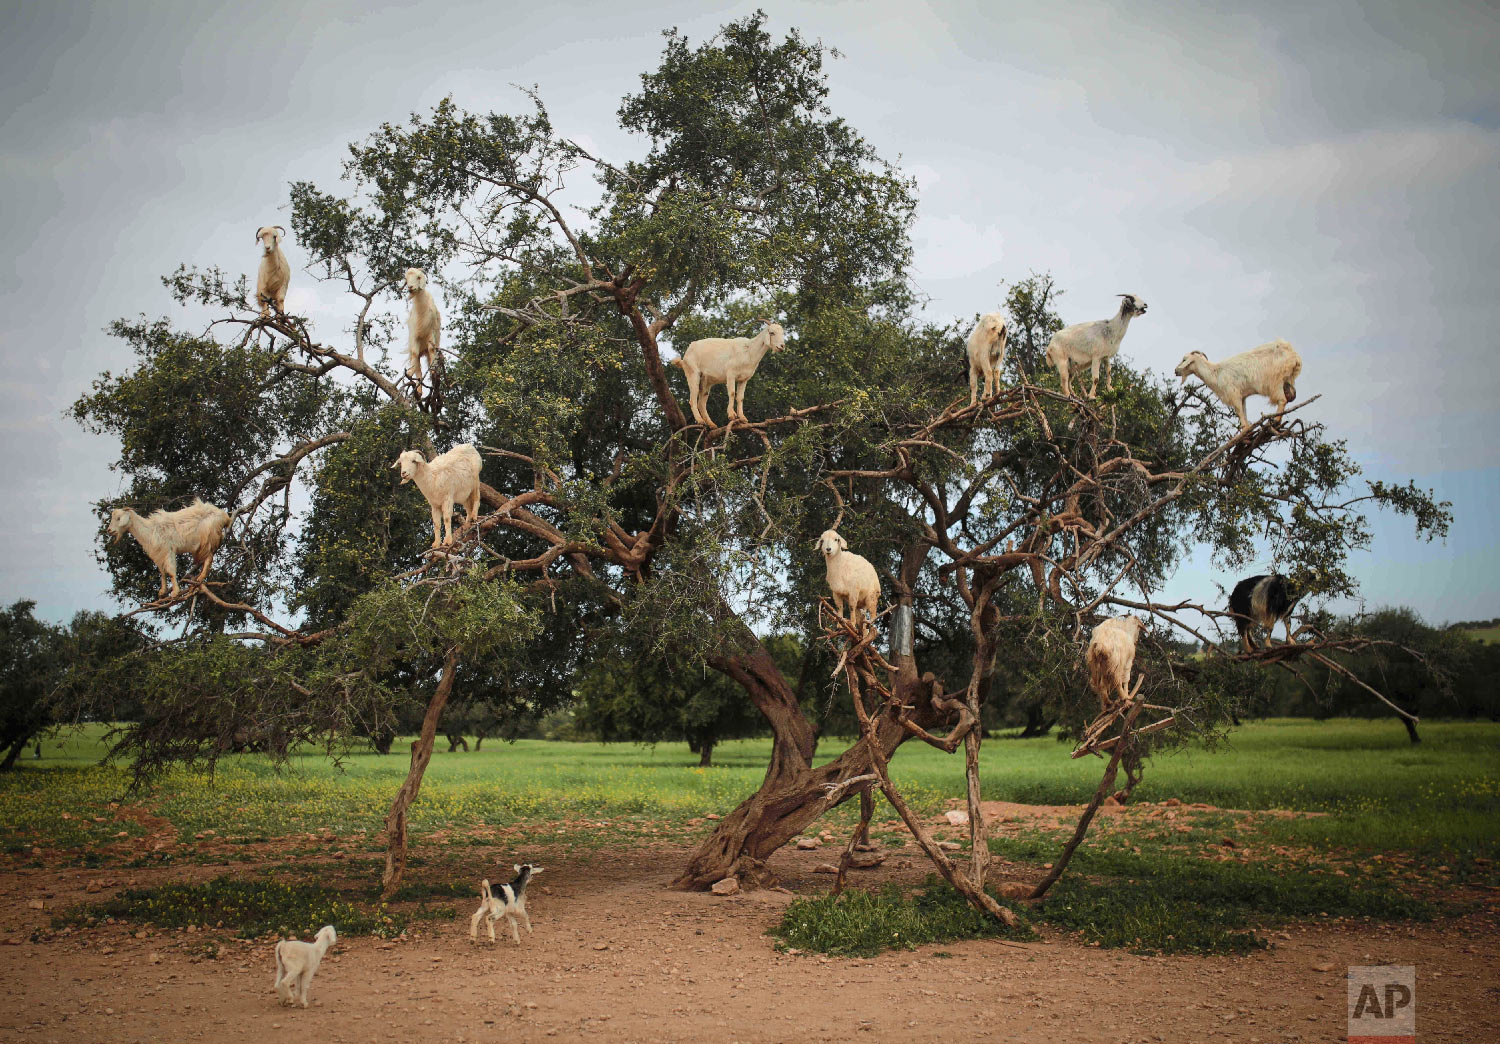  Tree-climbing goats feed on an Argania Spinosa, known as an Argan tree, in Essaouira, southwestern Morocco on April 4, 2018. (AP Photo/Mosa'ab Elshamy) 